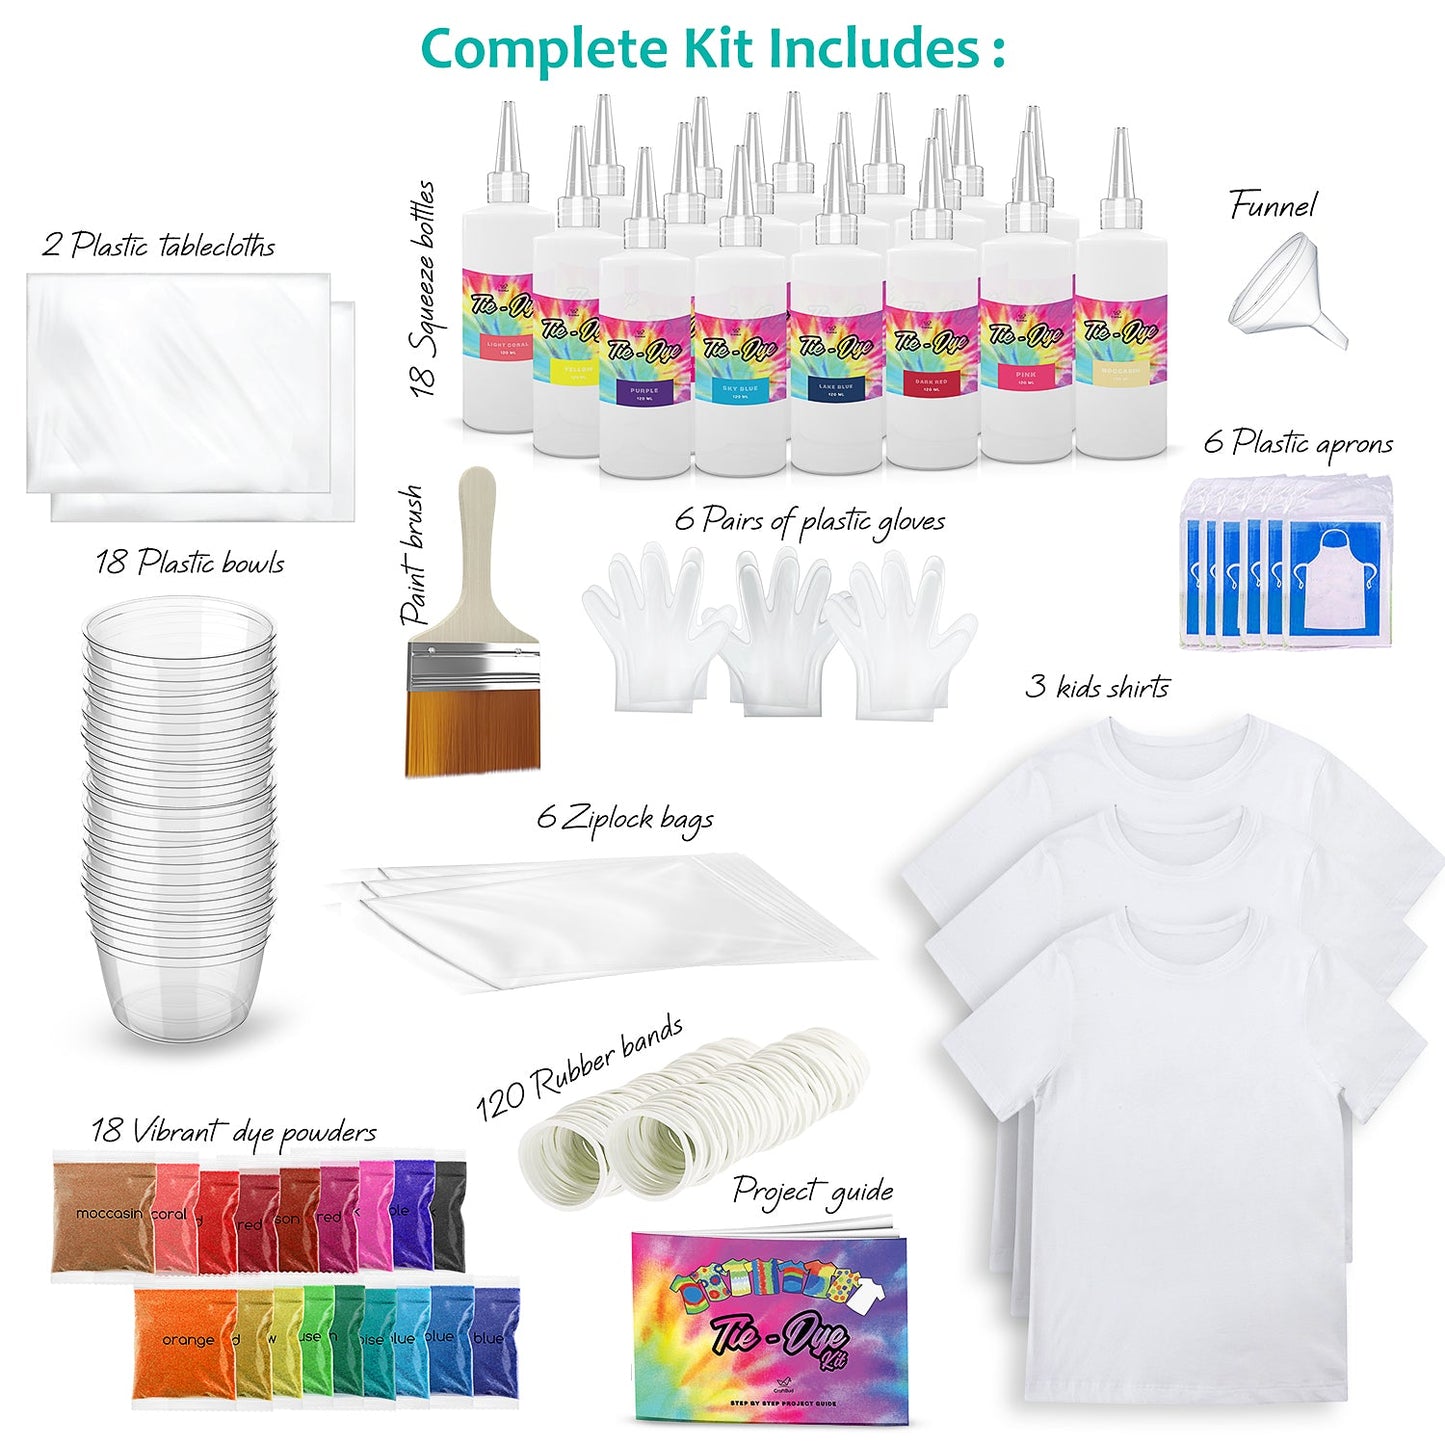 Tie Dye Kit for Kids & Adults